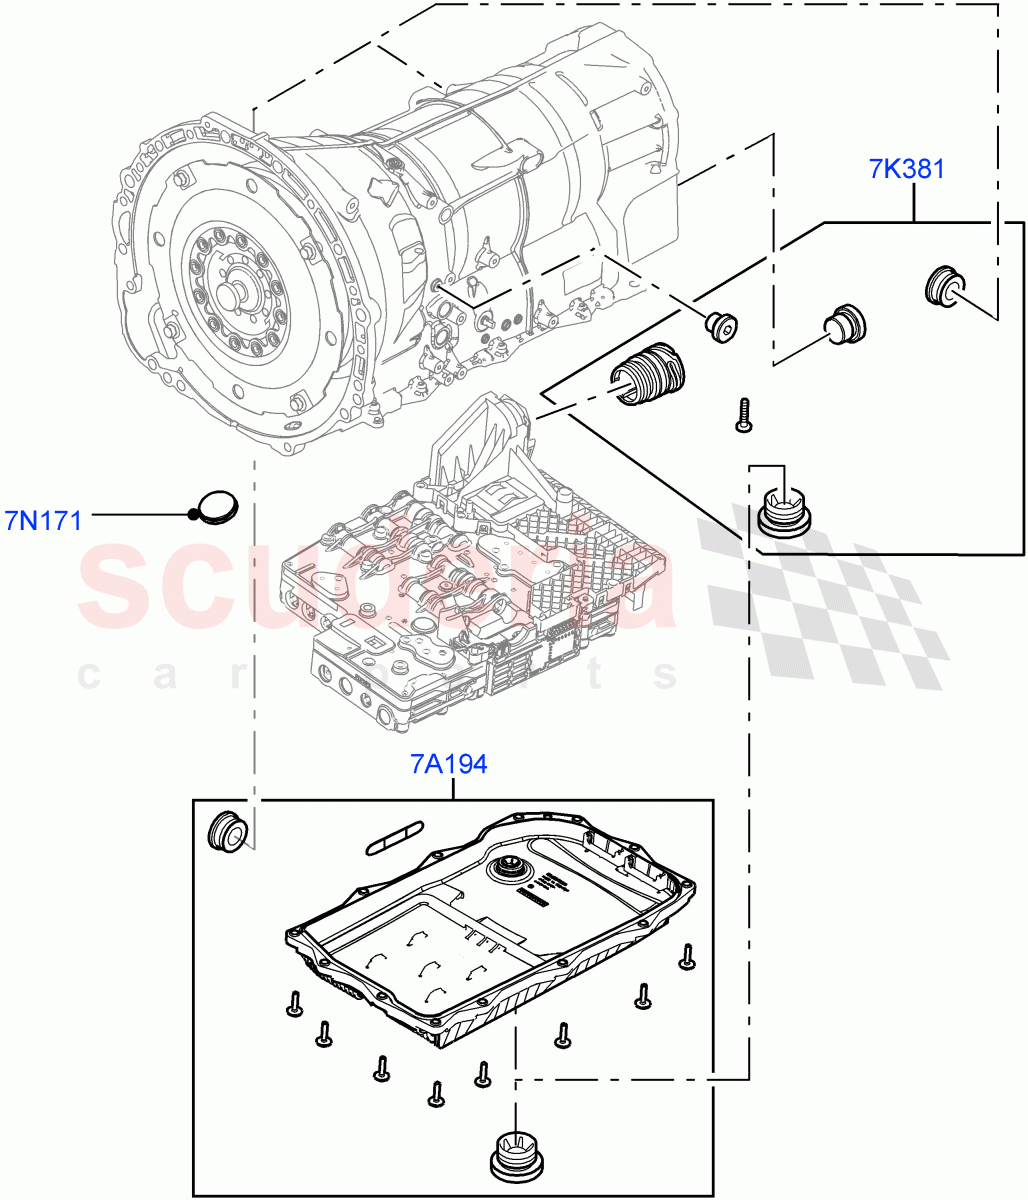 Transmission External Components(Nitra Plant Build)(2.0L I4 DSL HIGH DOHC AJ200,8 Speed Auto Trans ZF 8HP70 4WD,5.0 Petrol AJ133 DOHC CDA)((V)FROMK2000001) of Land Rover Land Rover Discovery 5 (2017+) [3.0 DOHC GDI SC V6 Petrol]